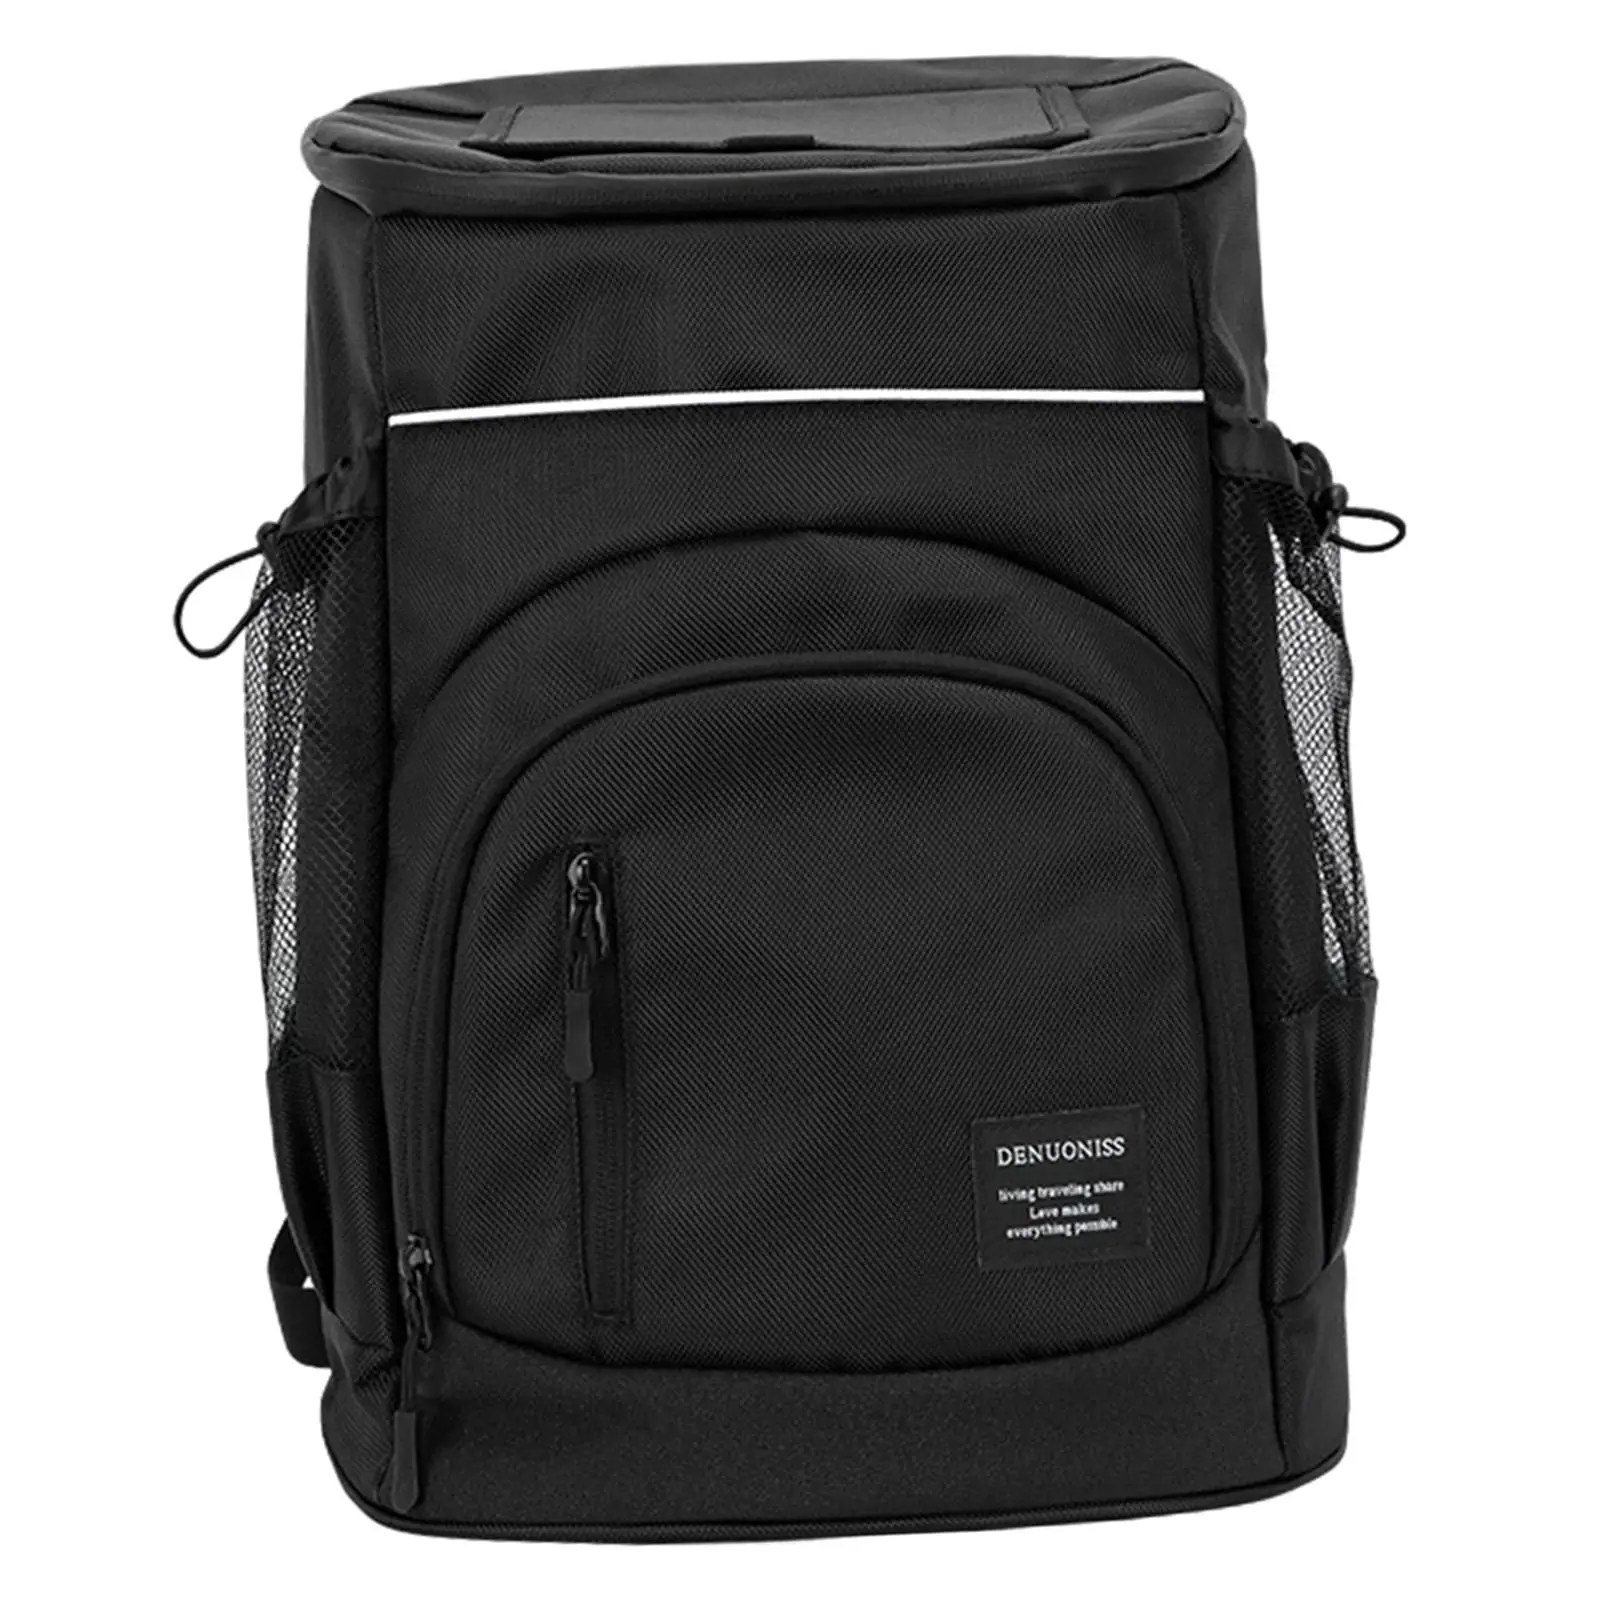 Insulated cooler  Lightweight  Cooler Bag  Backpack for Men Women Picnic Beach Camping Hiking